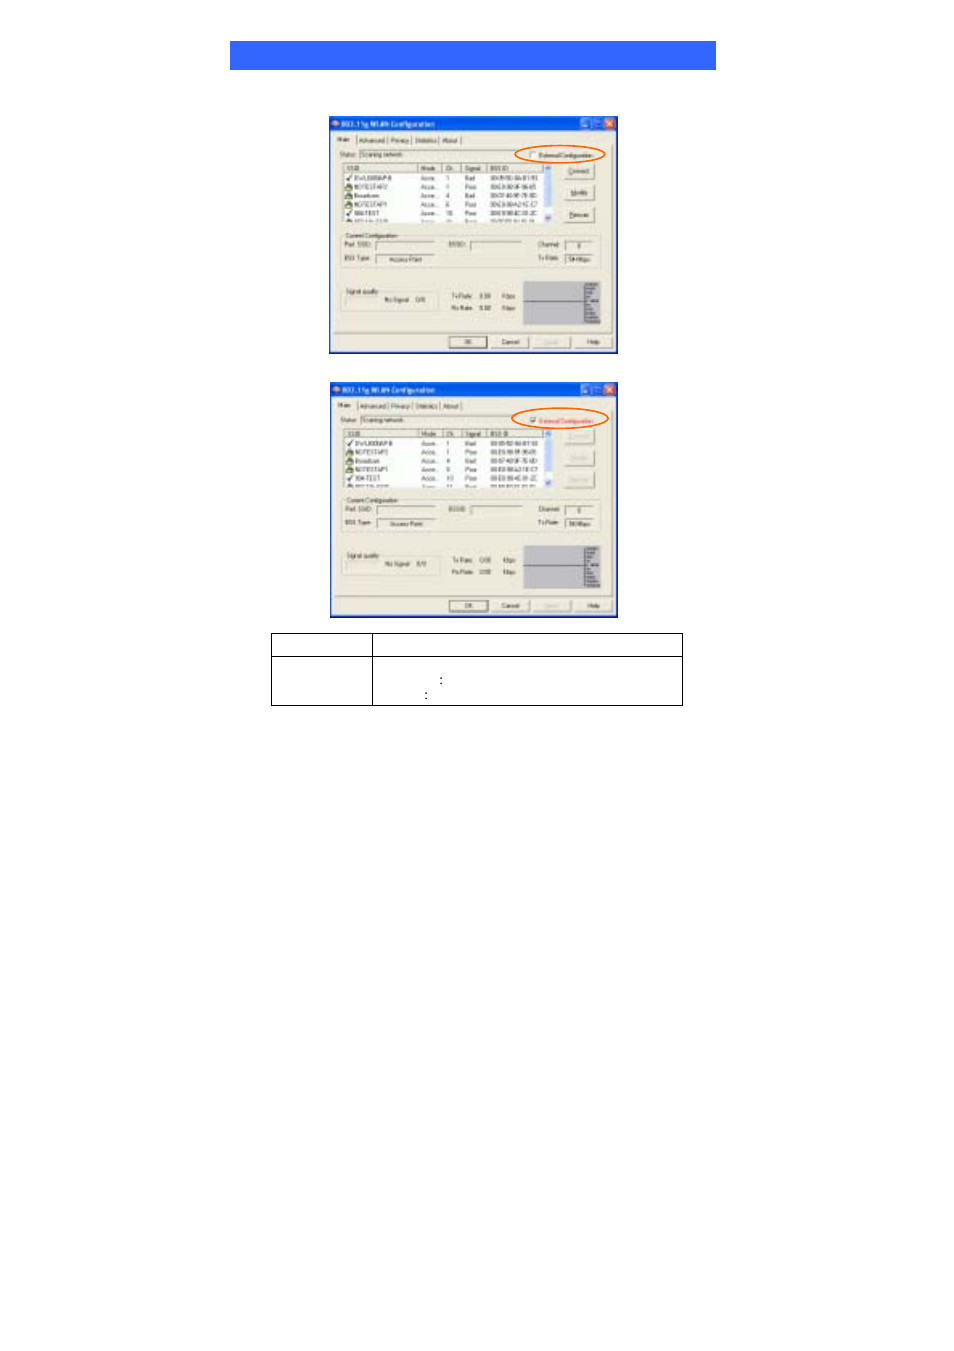 Main tab | Xterasys Wireless LAN Card User Manual | Page 23 / 35